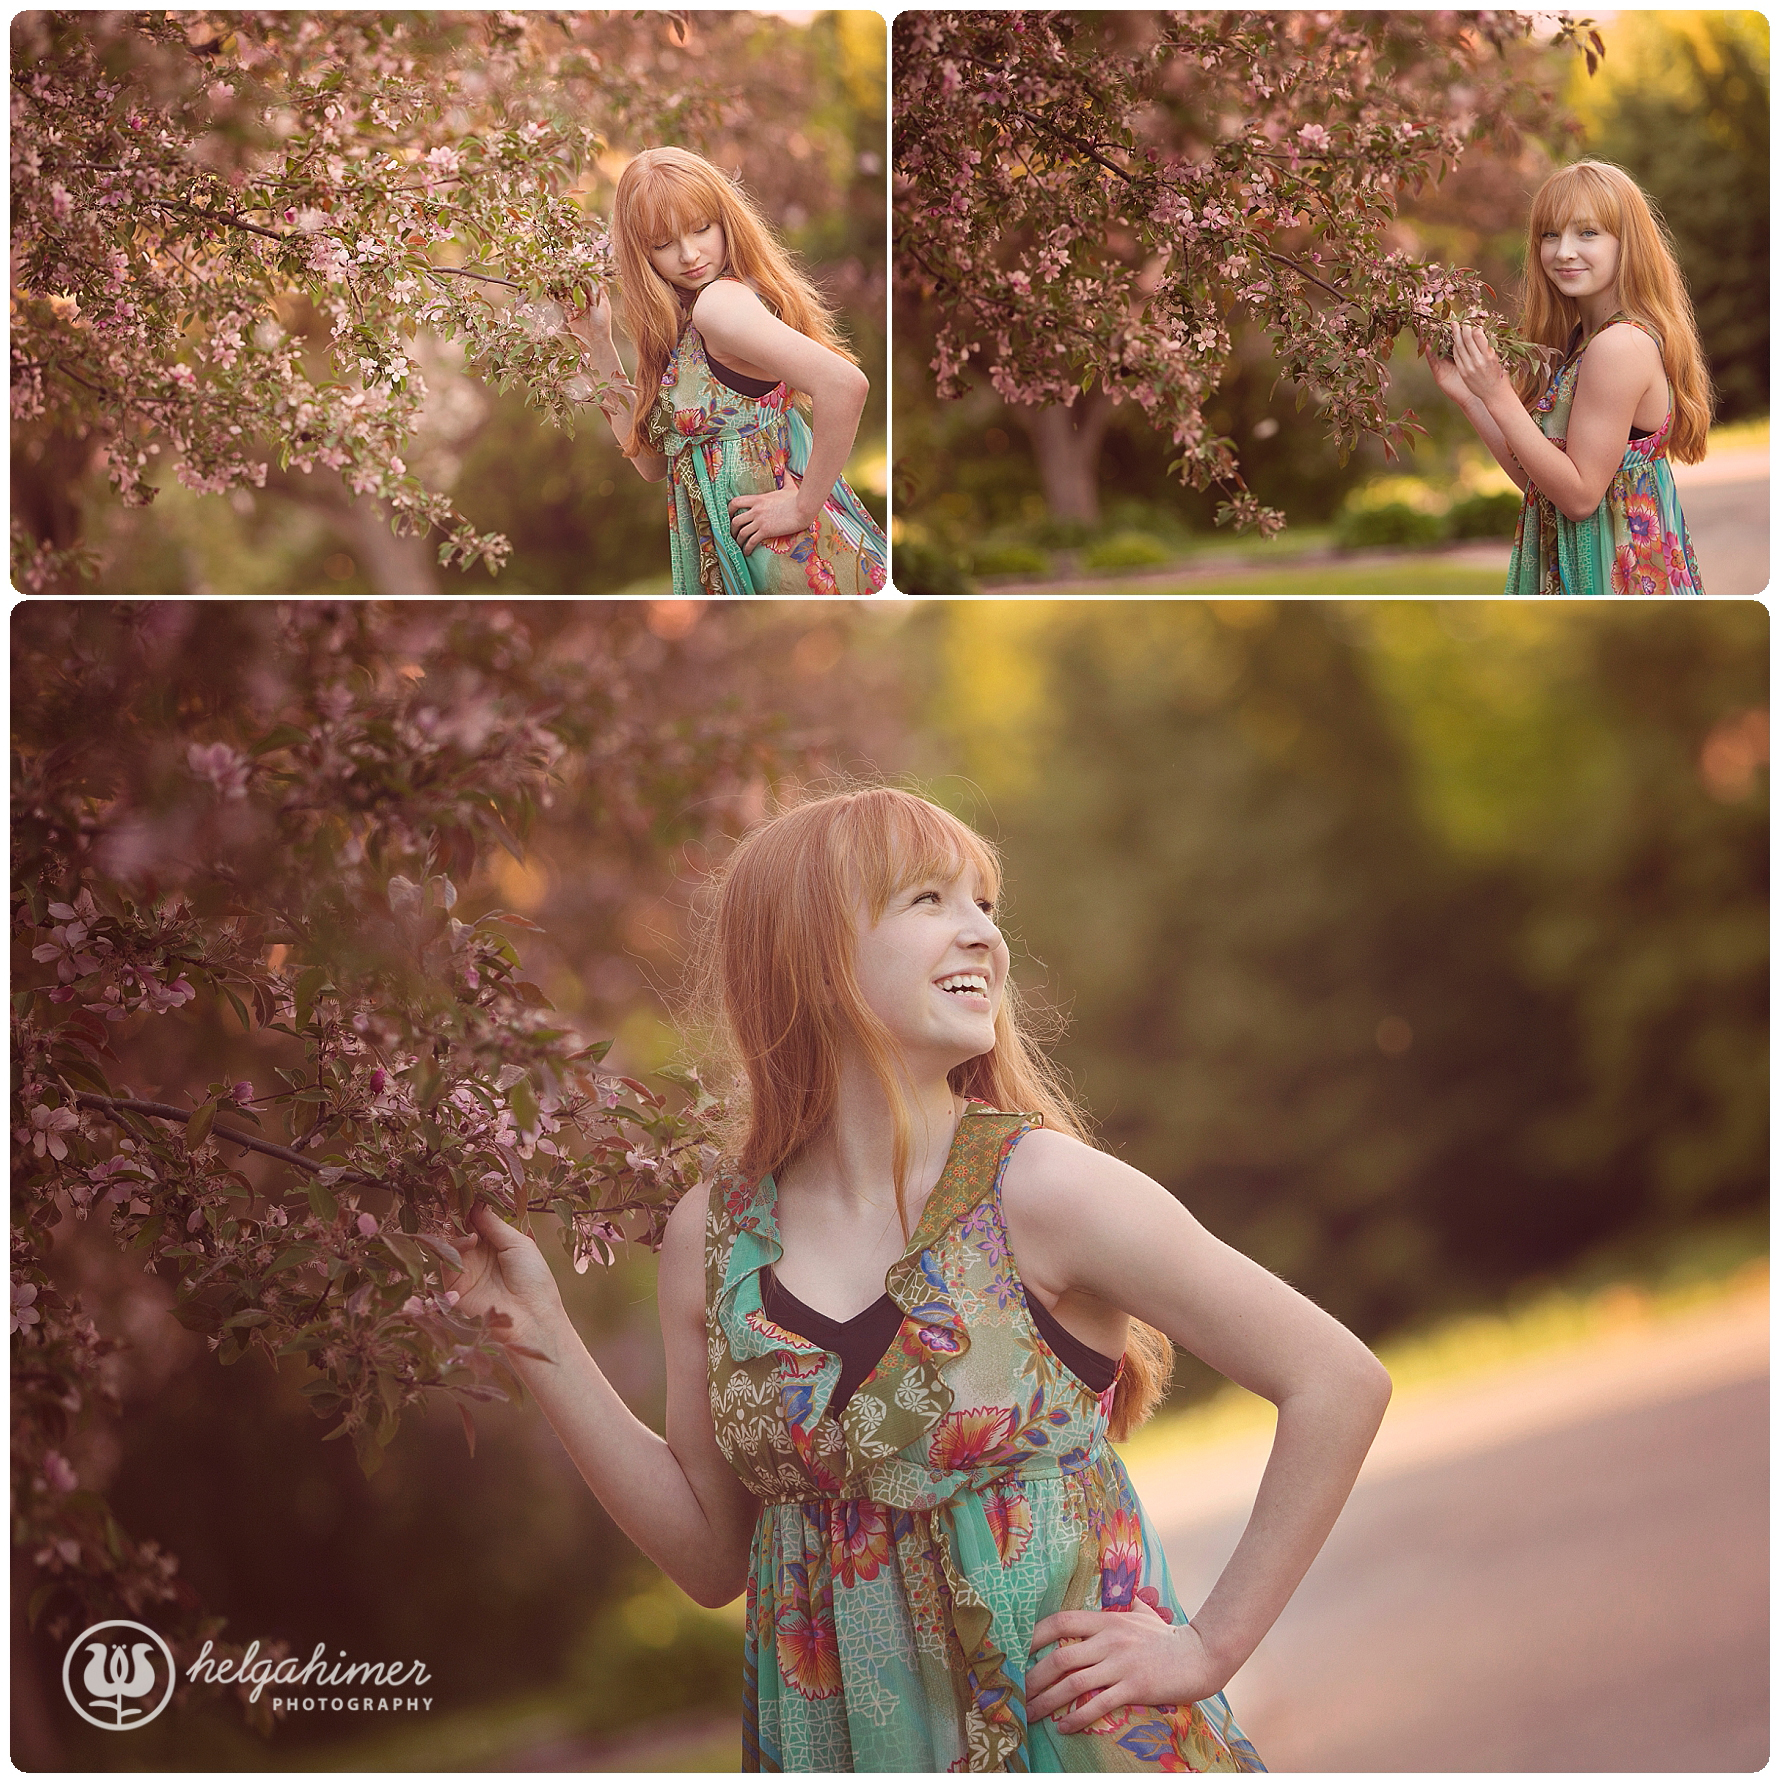 er-photography-apple-blossom-summer-sudbury-professional-photographer-personal-branding-cherry-blossom-senior-photo-girl-model